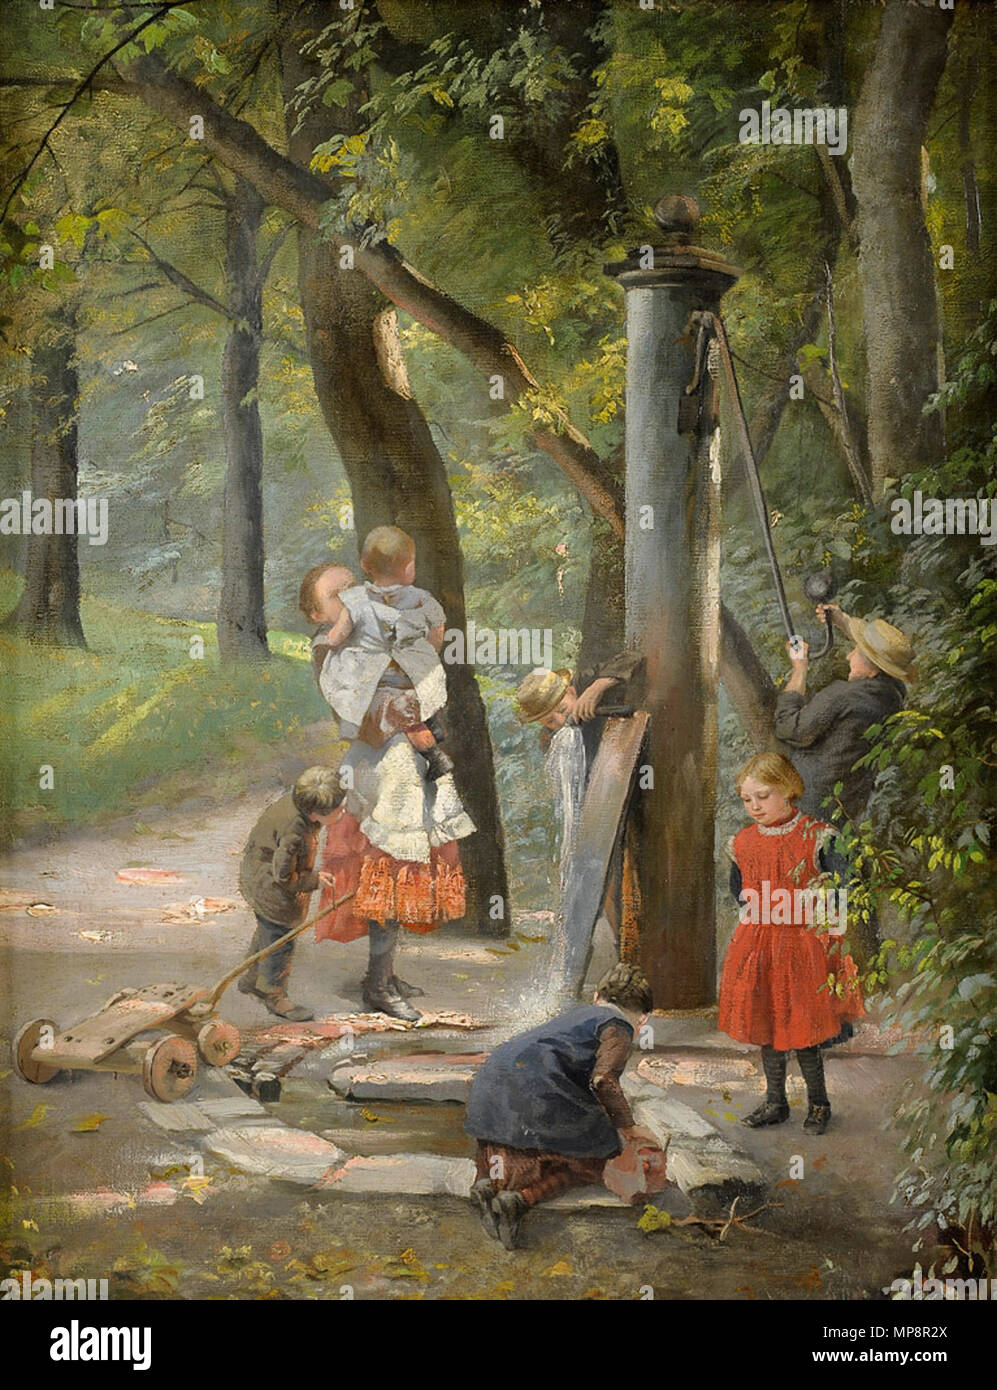 Kinder am Brunnen. Öl auf Leinwand, 50 x 40 cm. Unbekannter Meister 19. Jh.  19th century. Anonymous 765 Kinder am Brunnen 19Jh Stock Photo - Alamy